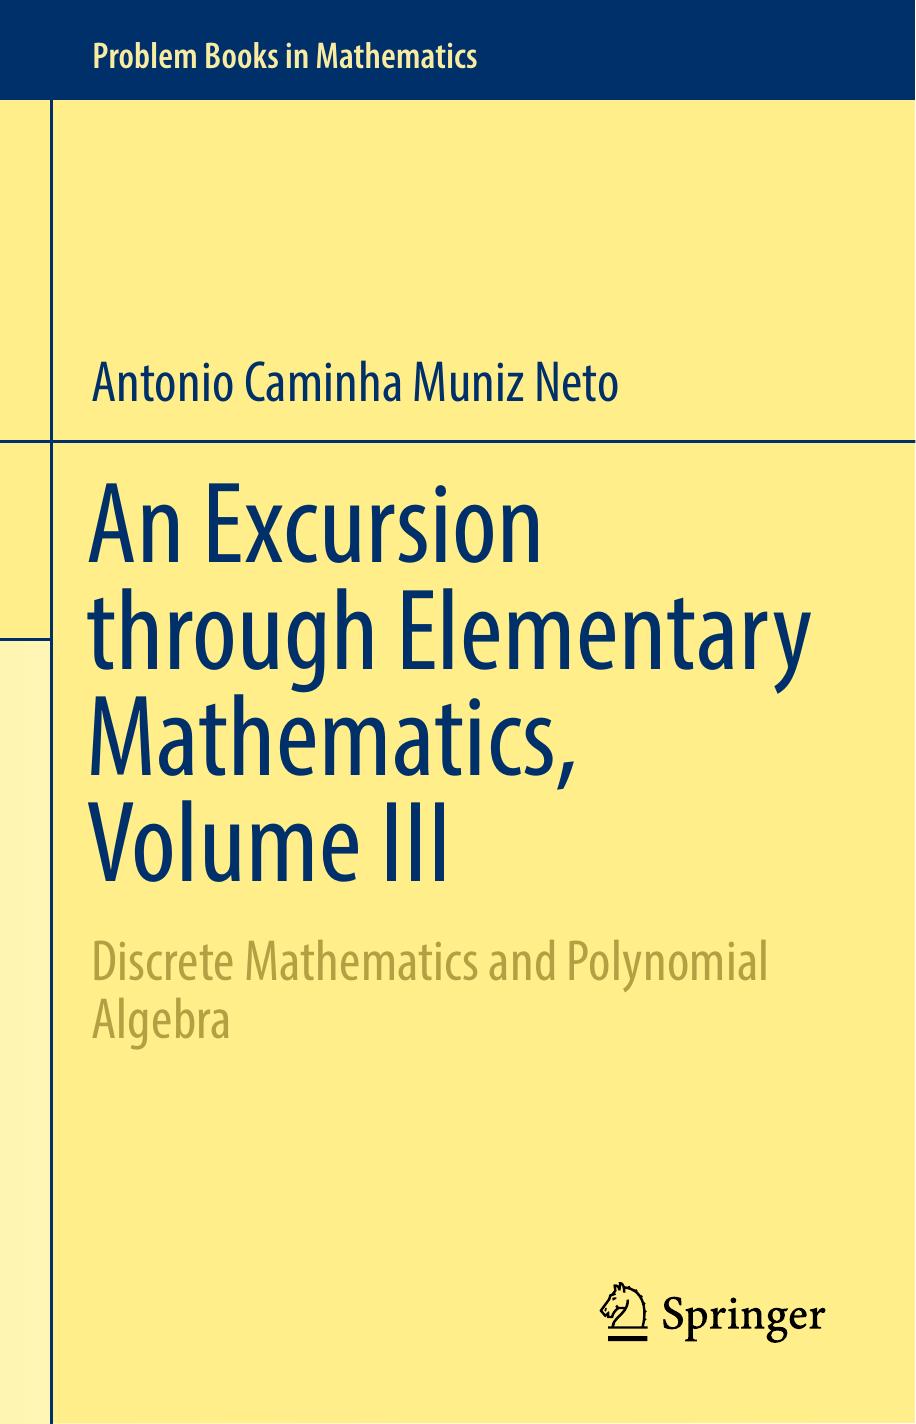 An Excursion through Elementary Mathematics, 2018